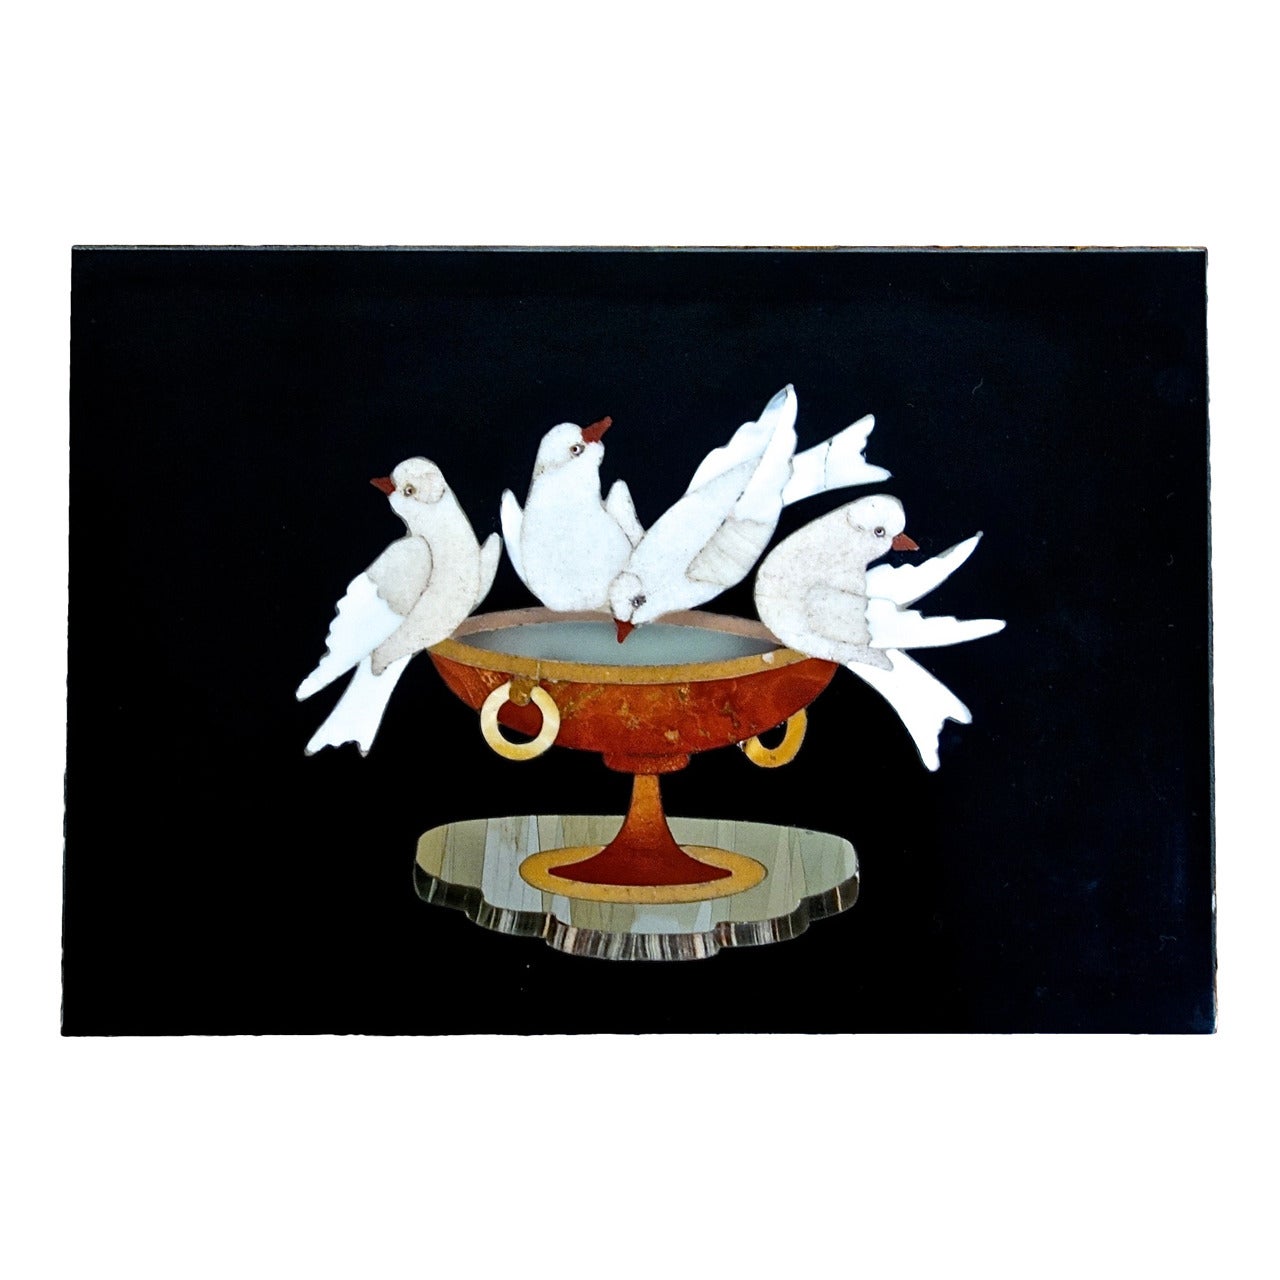 Pietra Dura of Doves, Decorative Art